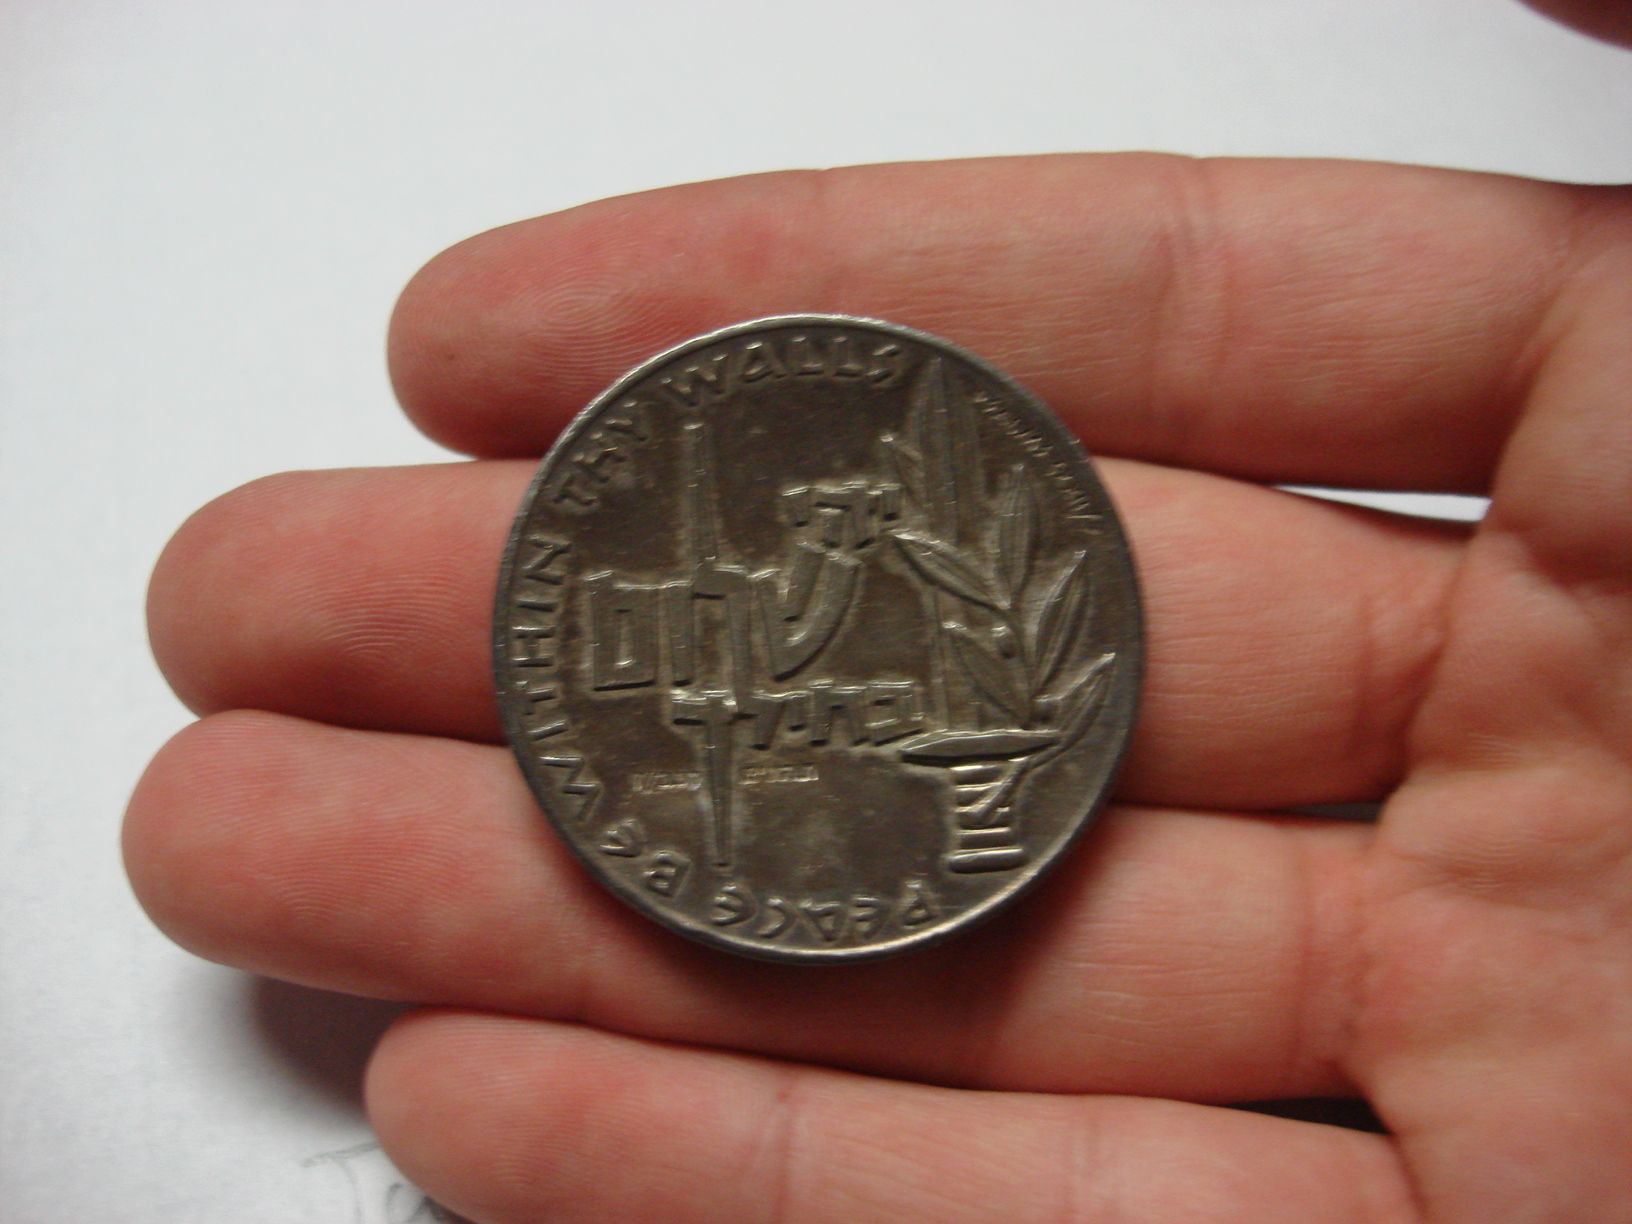 Israeli Valor Medal 
Issued 1958 
30 grams 
93.5% Silver 
Found Oct. 8 2014